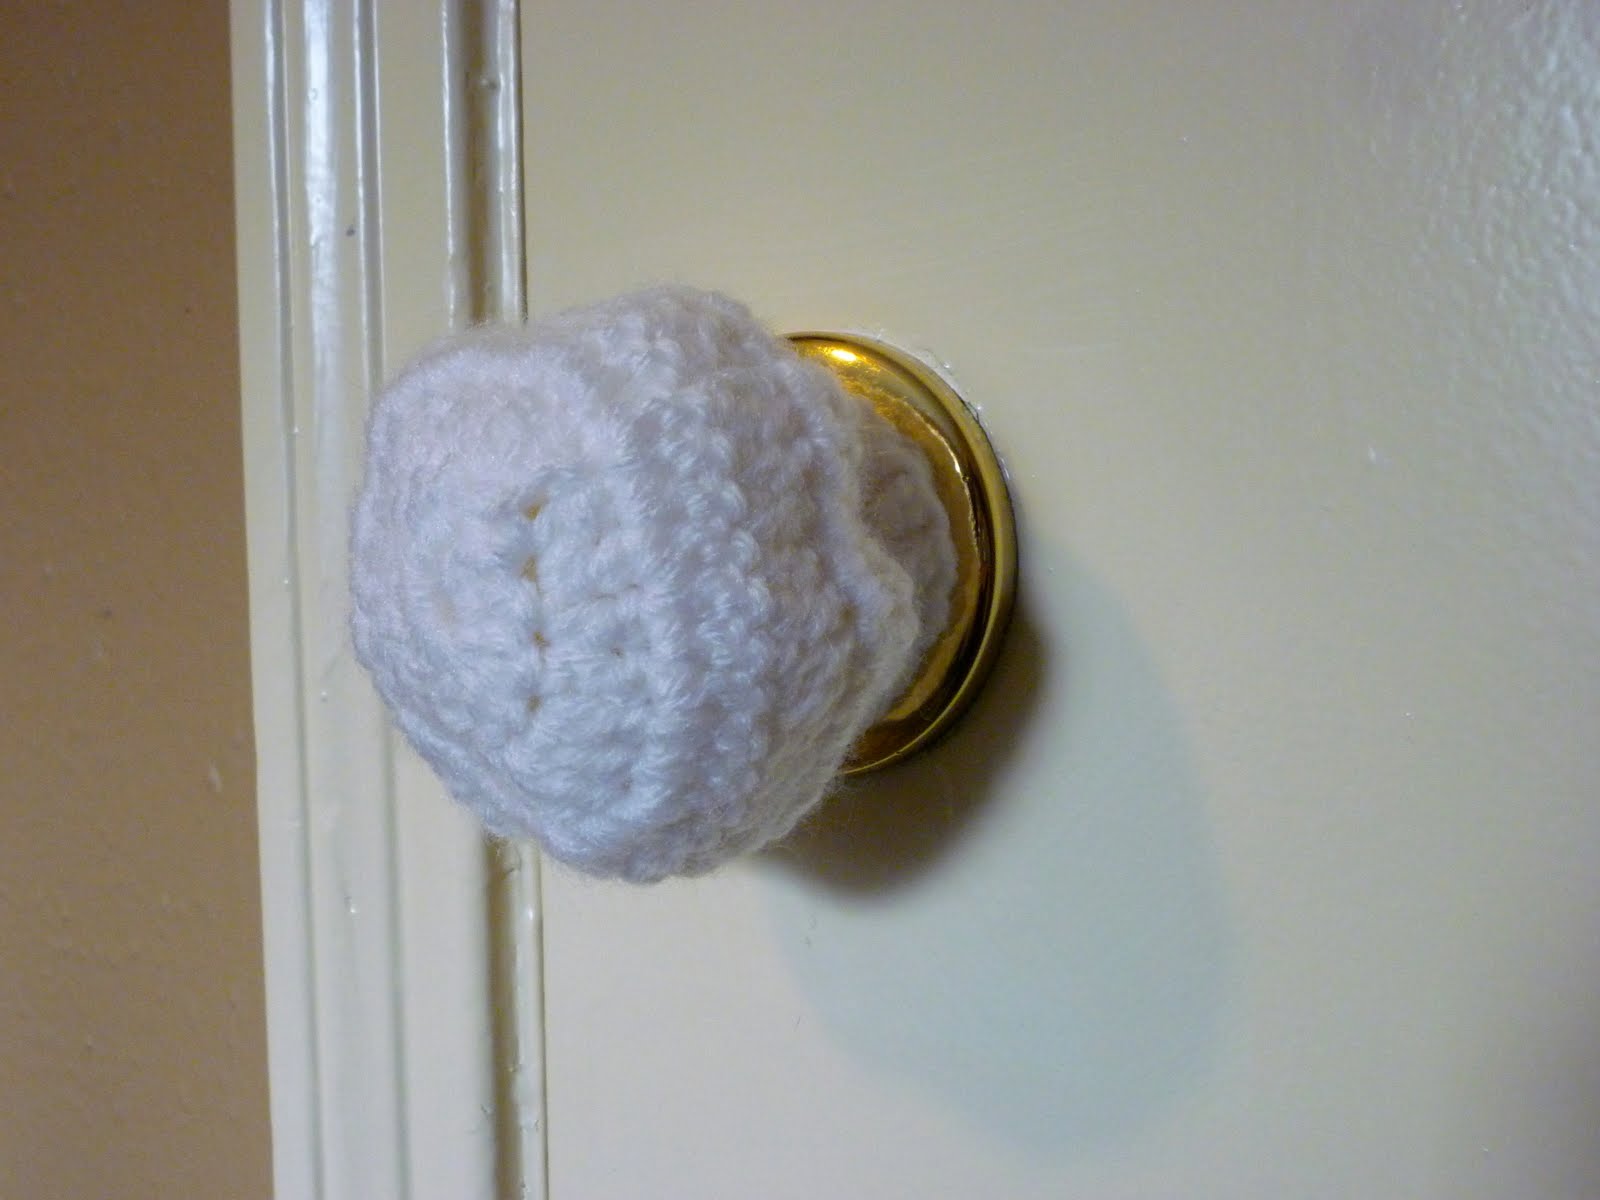 padded door knob covers photo - 5